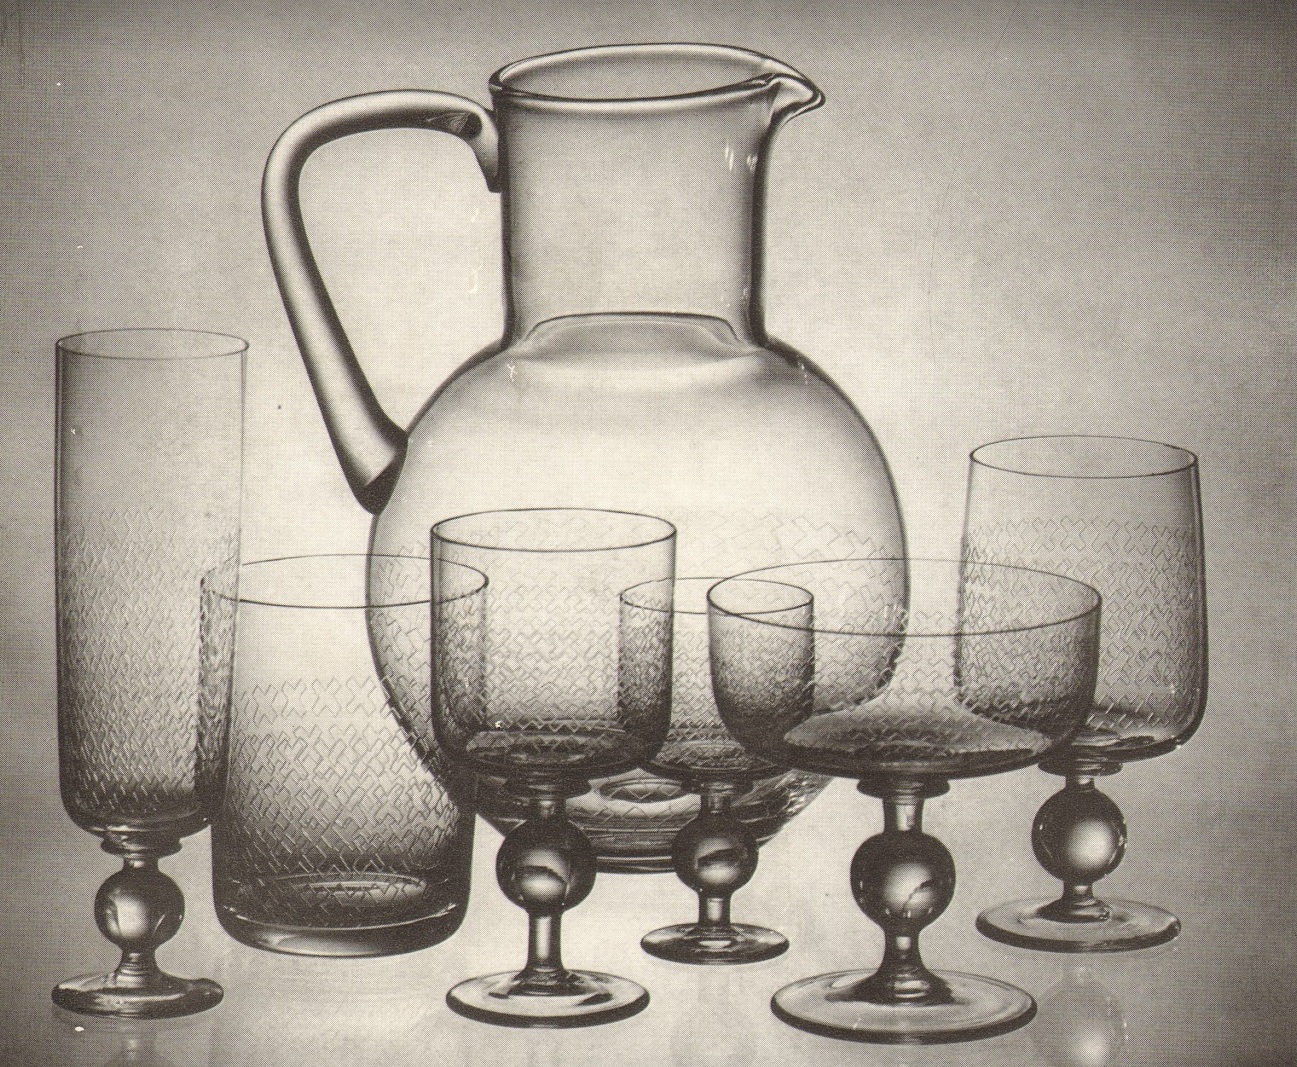 Lednicke Rovne - 1336/M, Drinking set